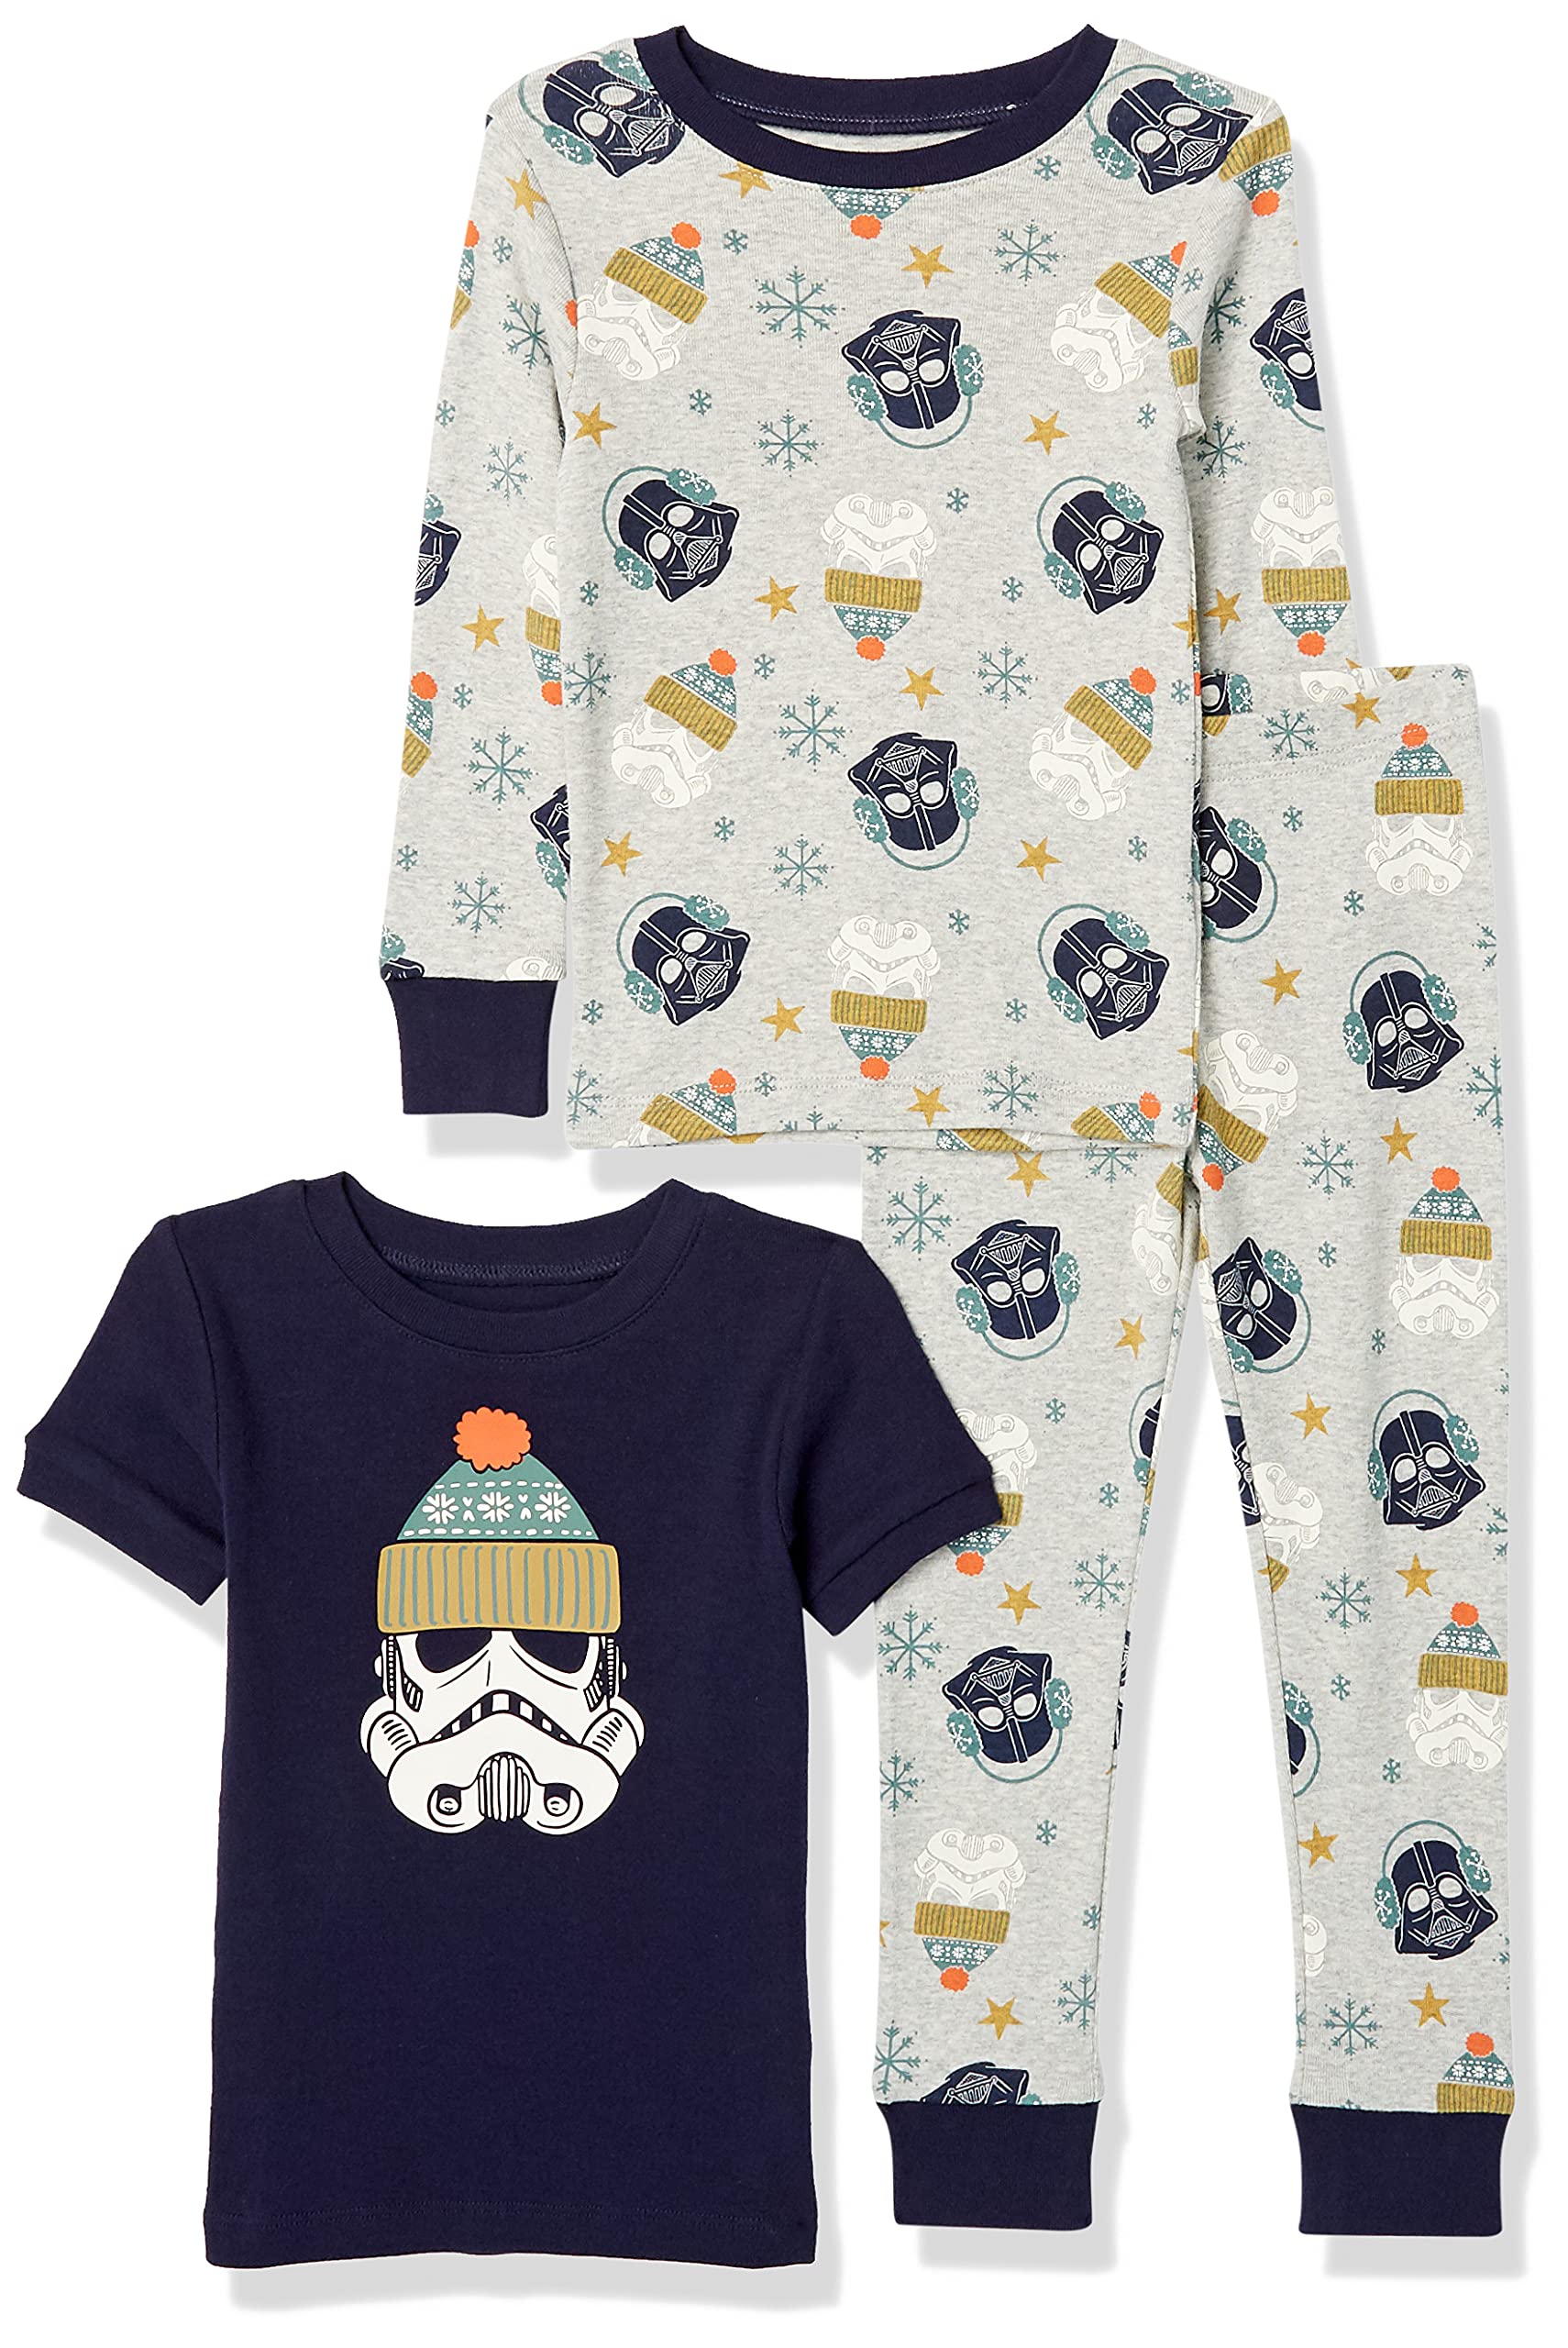 Amazon Essentials Star Wars Holiday Family Pajama Sets